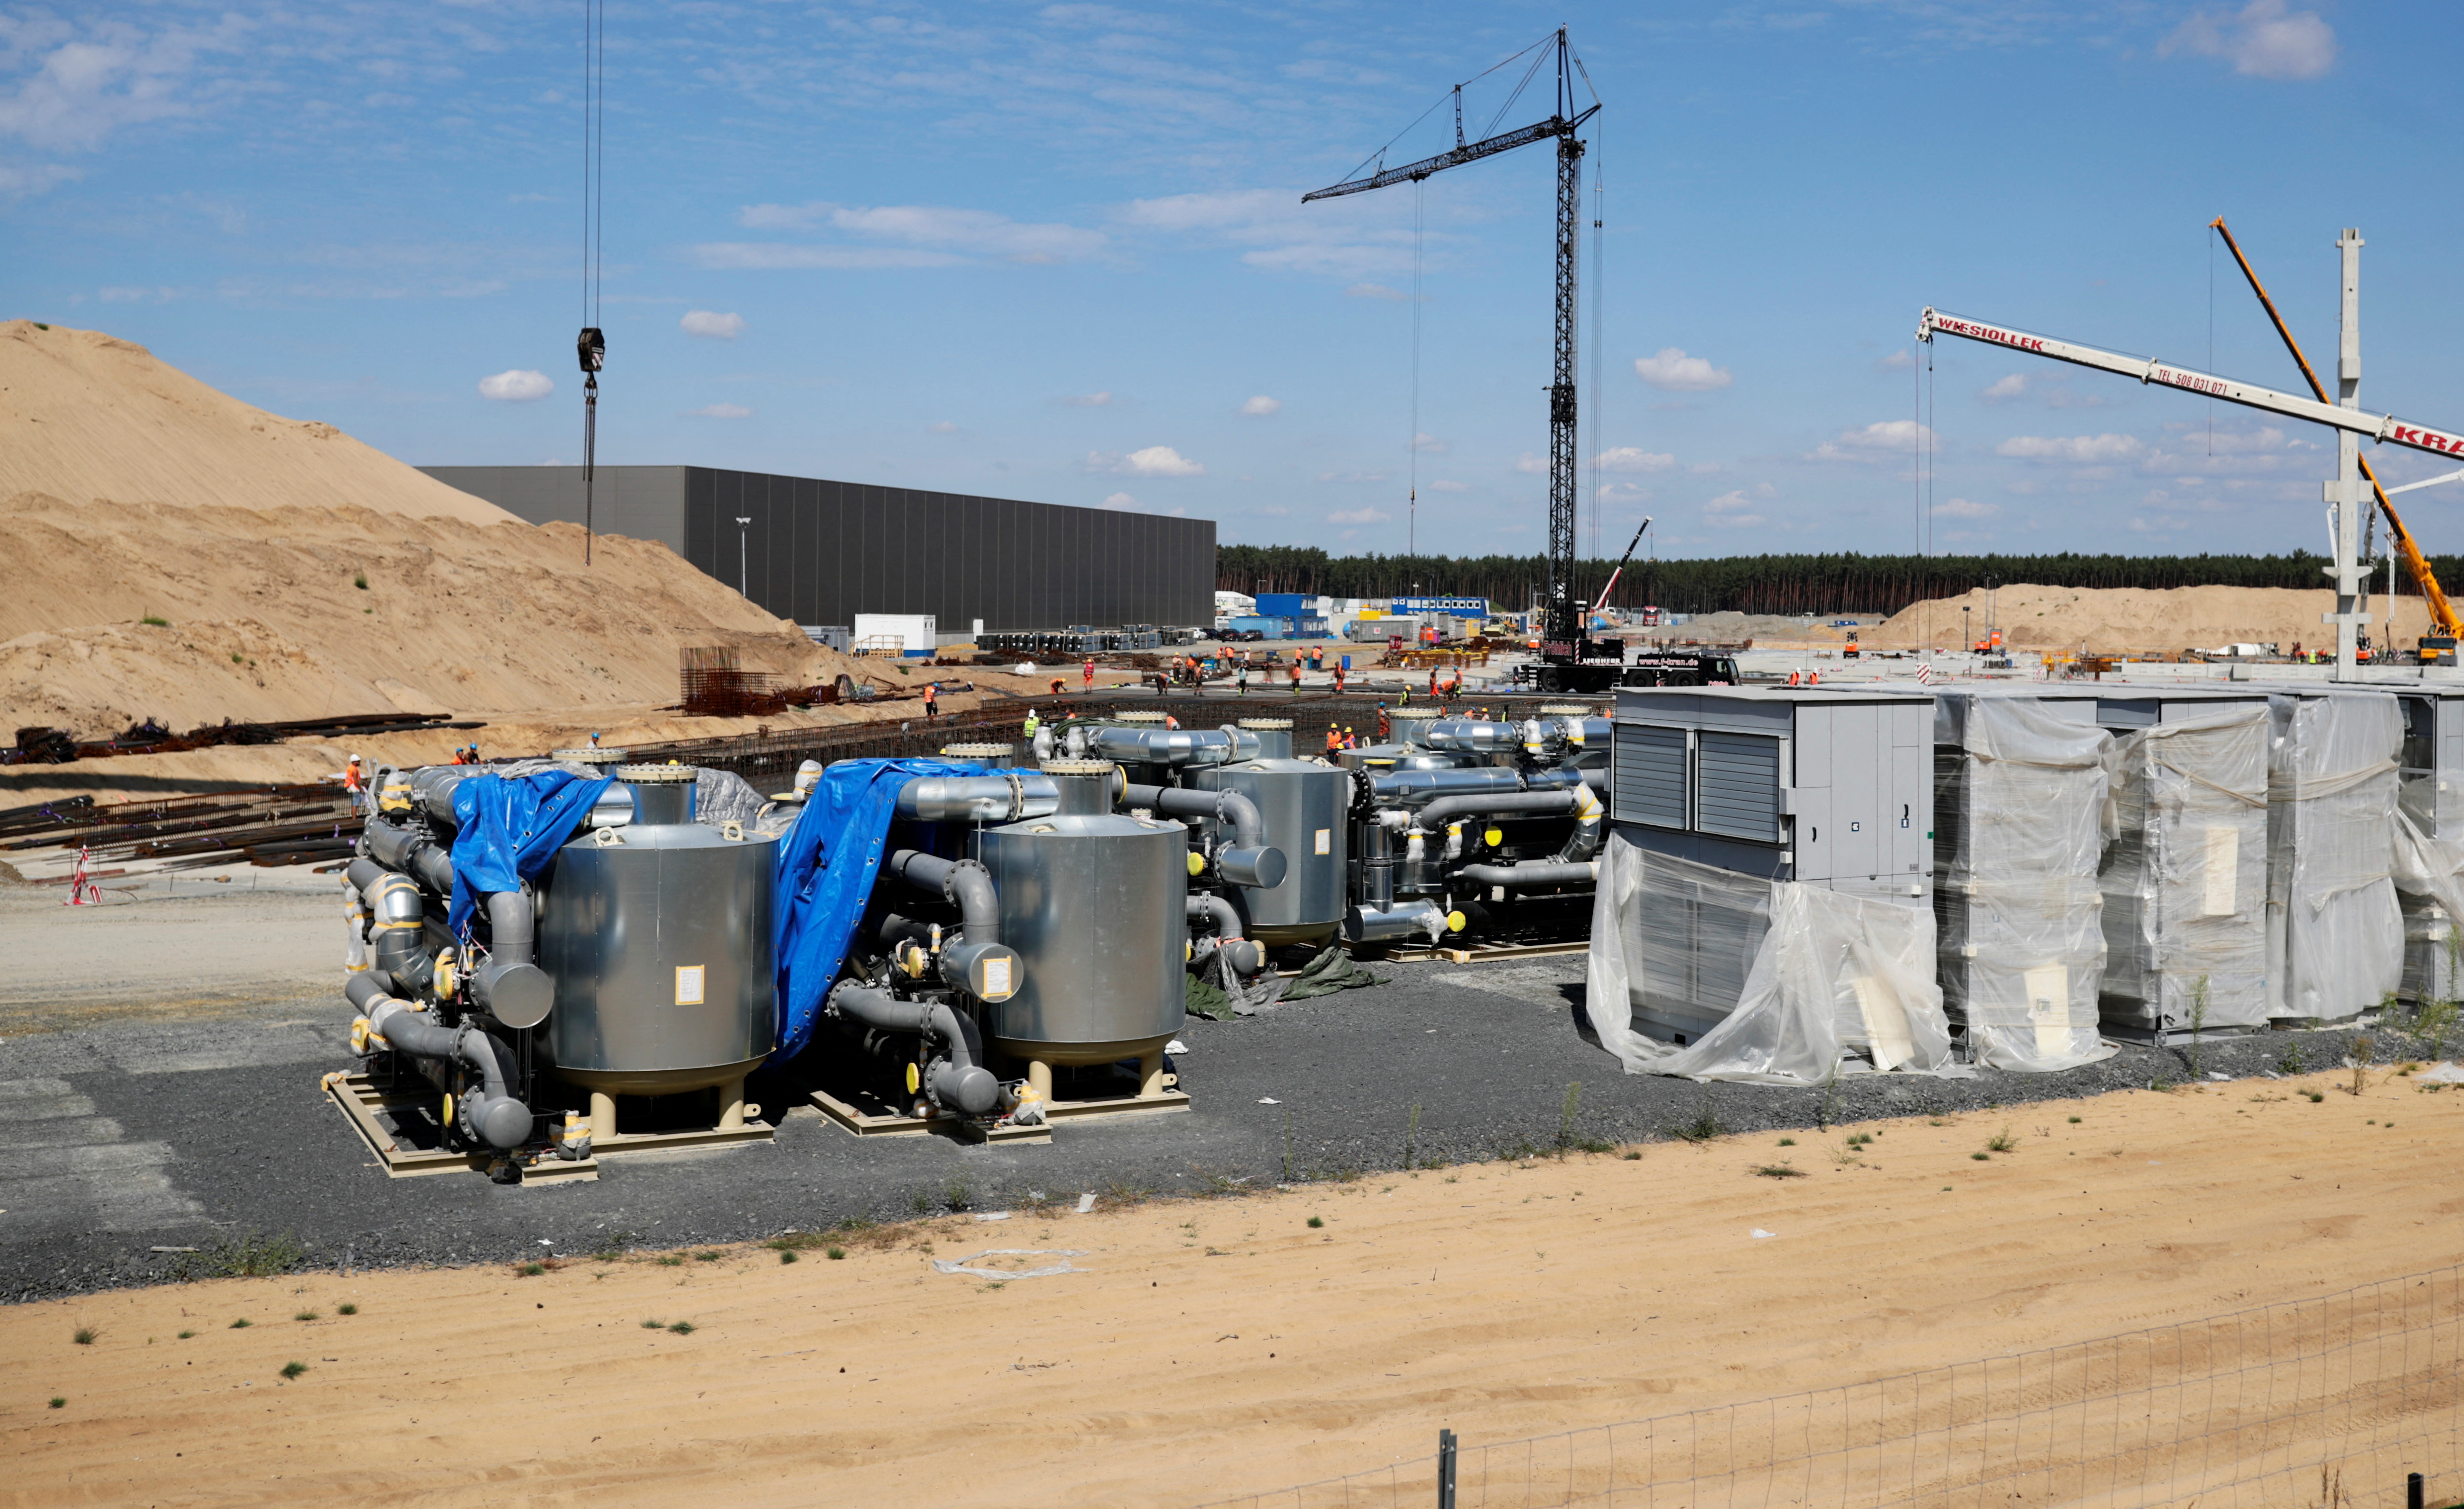 The construction site of the future Tesla Gigafactory in Gruenheide